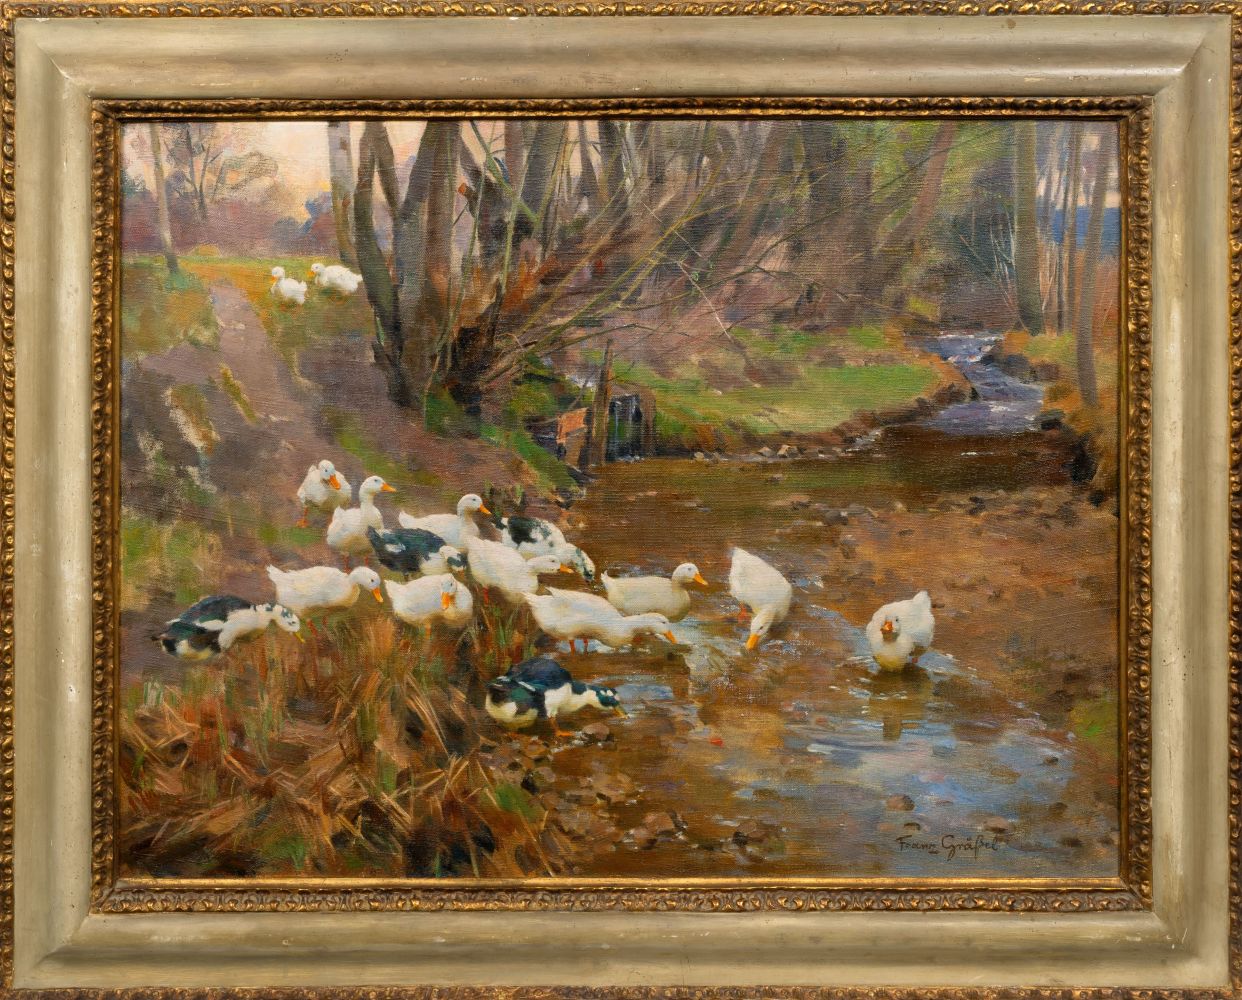 Ducks by a Creek - image 2